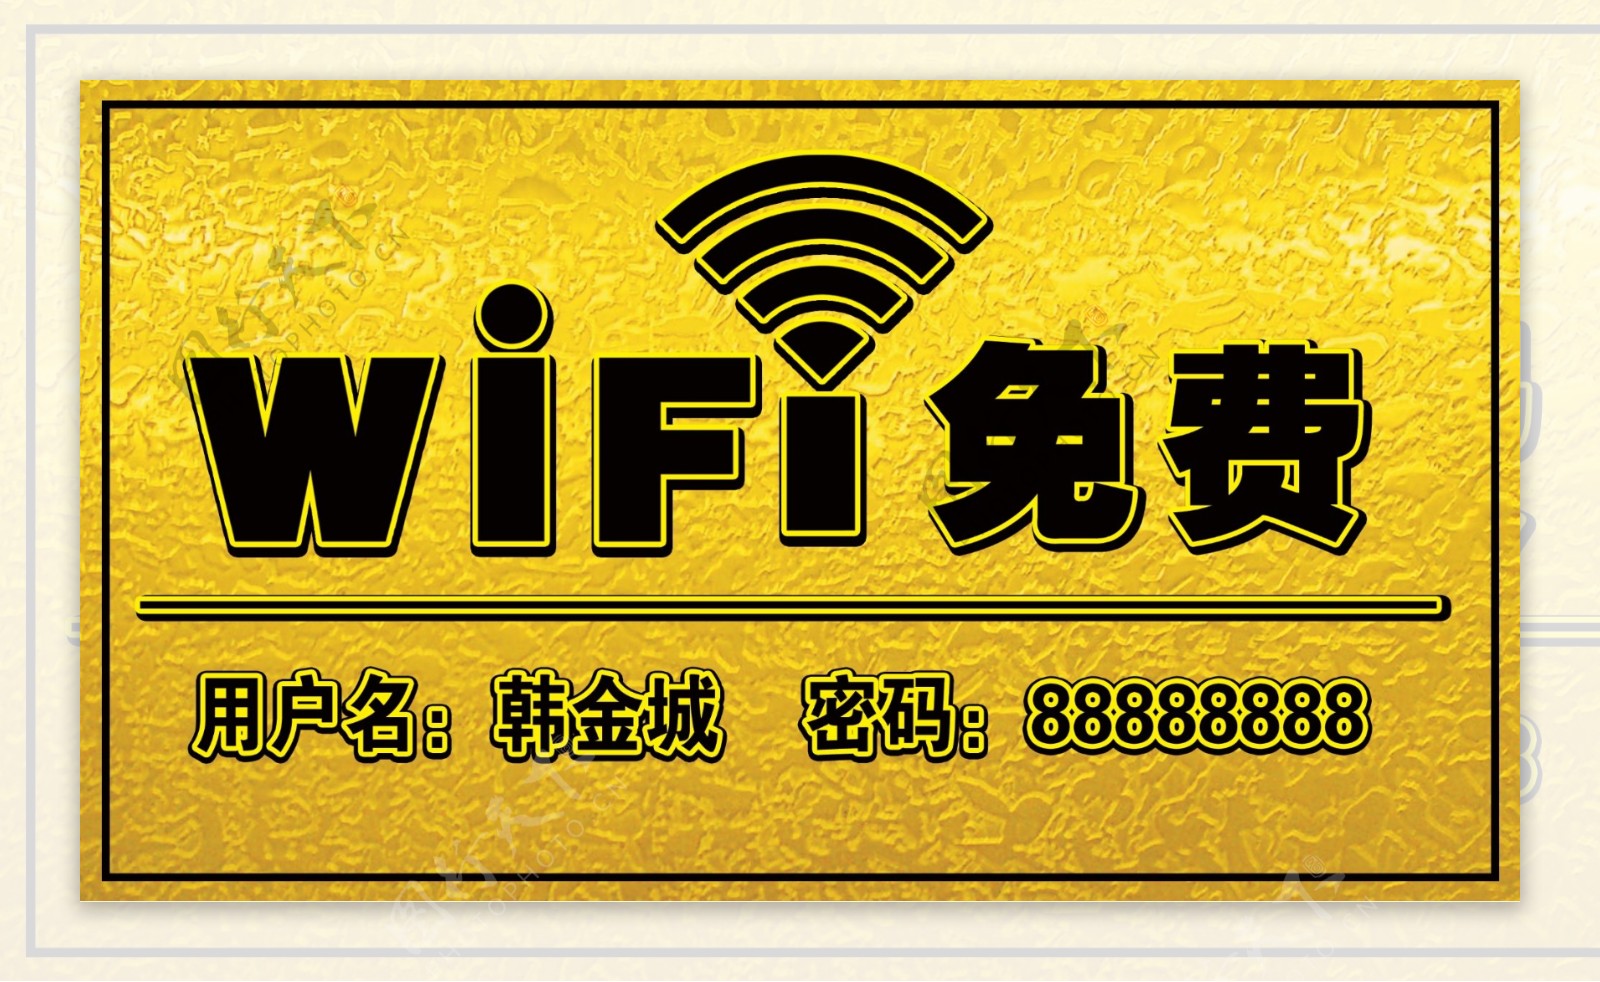 wifi标志图片素材-编号37383157-图行天下